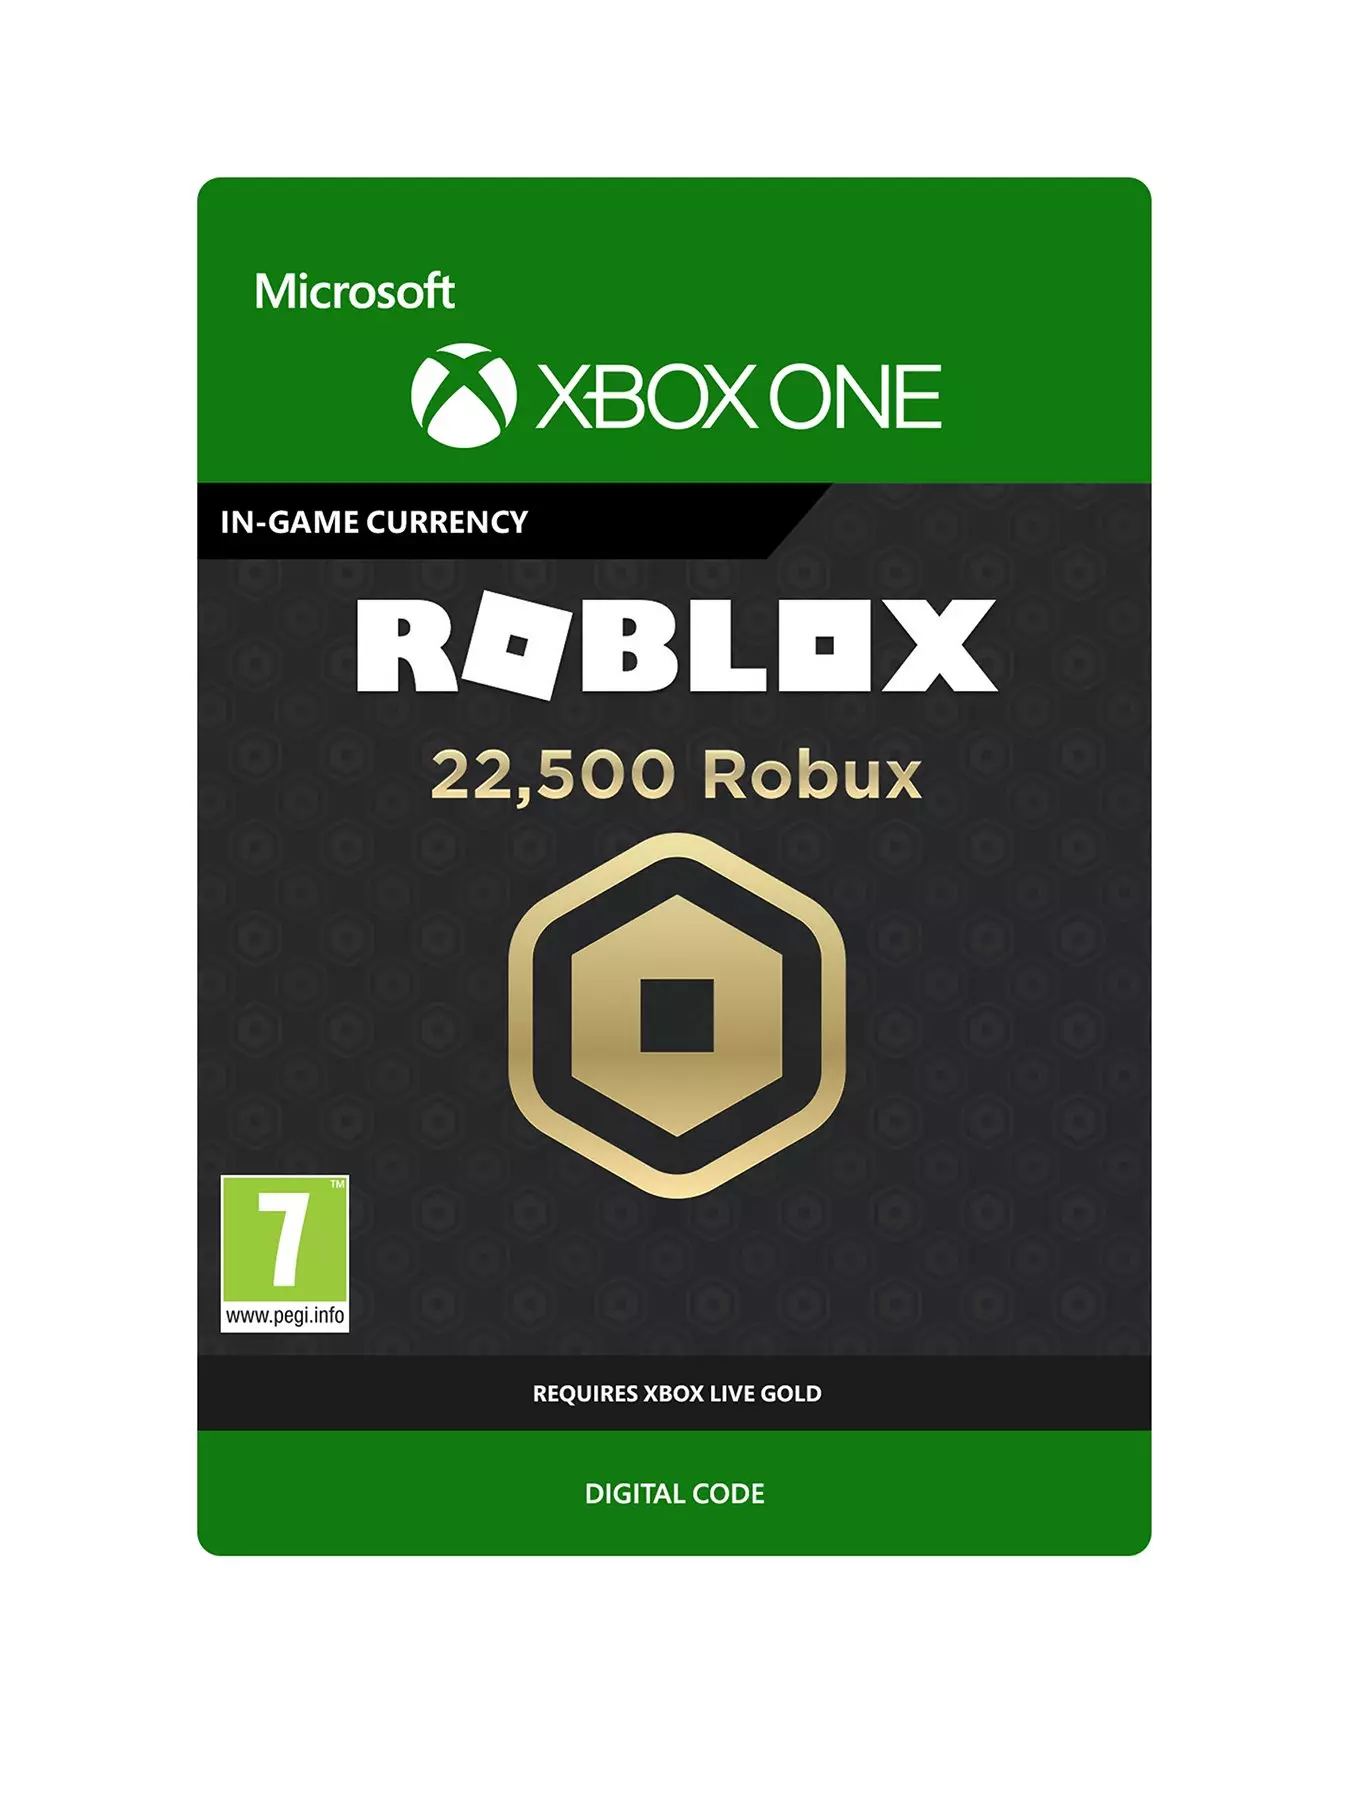 How To Redeem Roblox Toy Codes Xbox 1 3b0xtyyc1xibvm